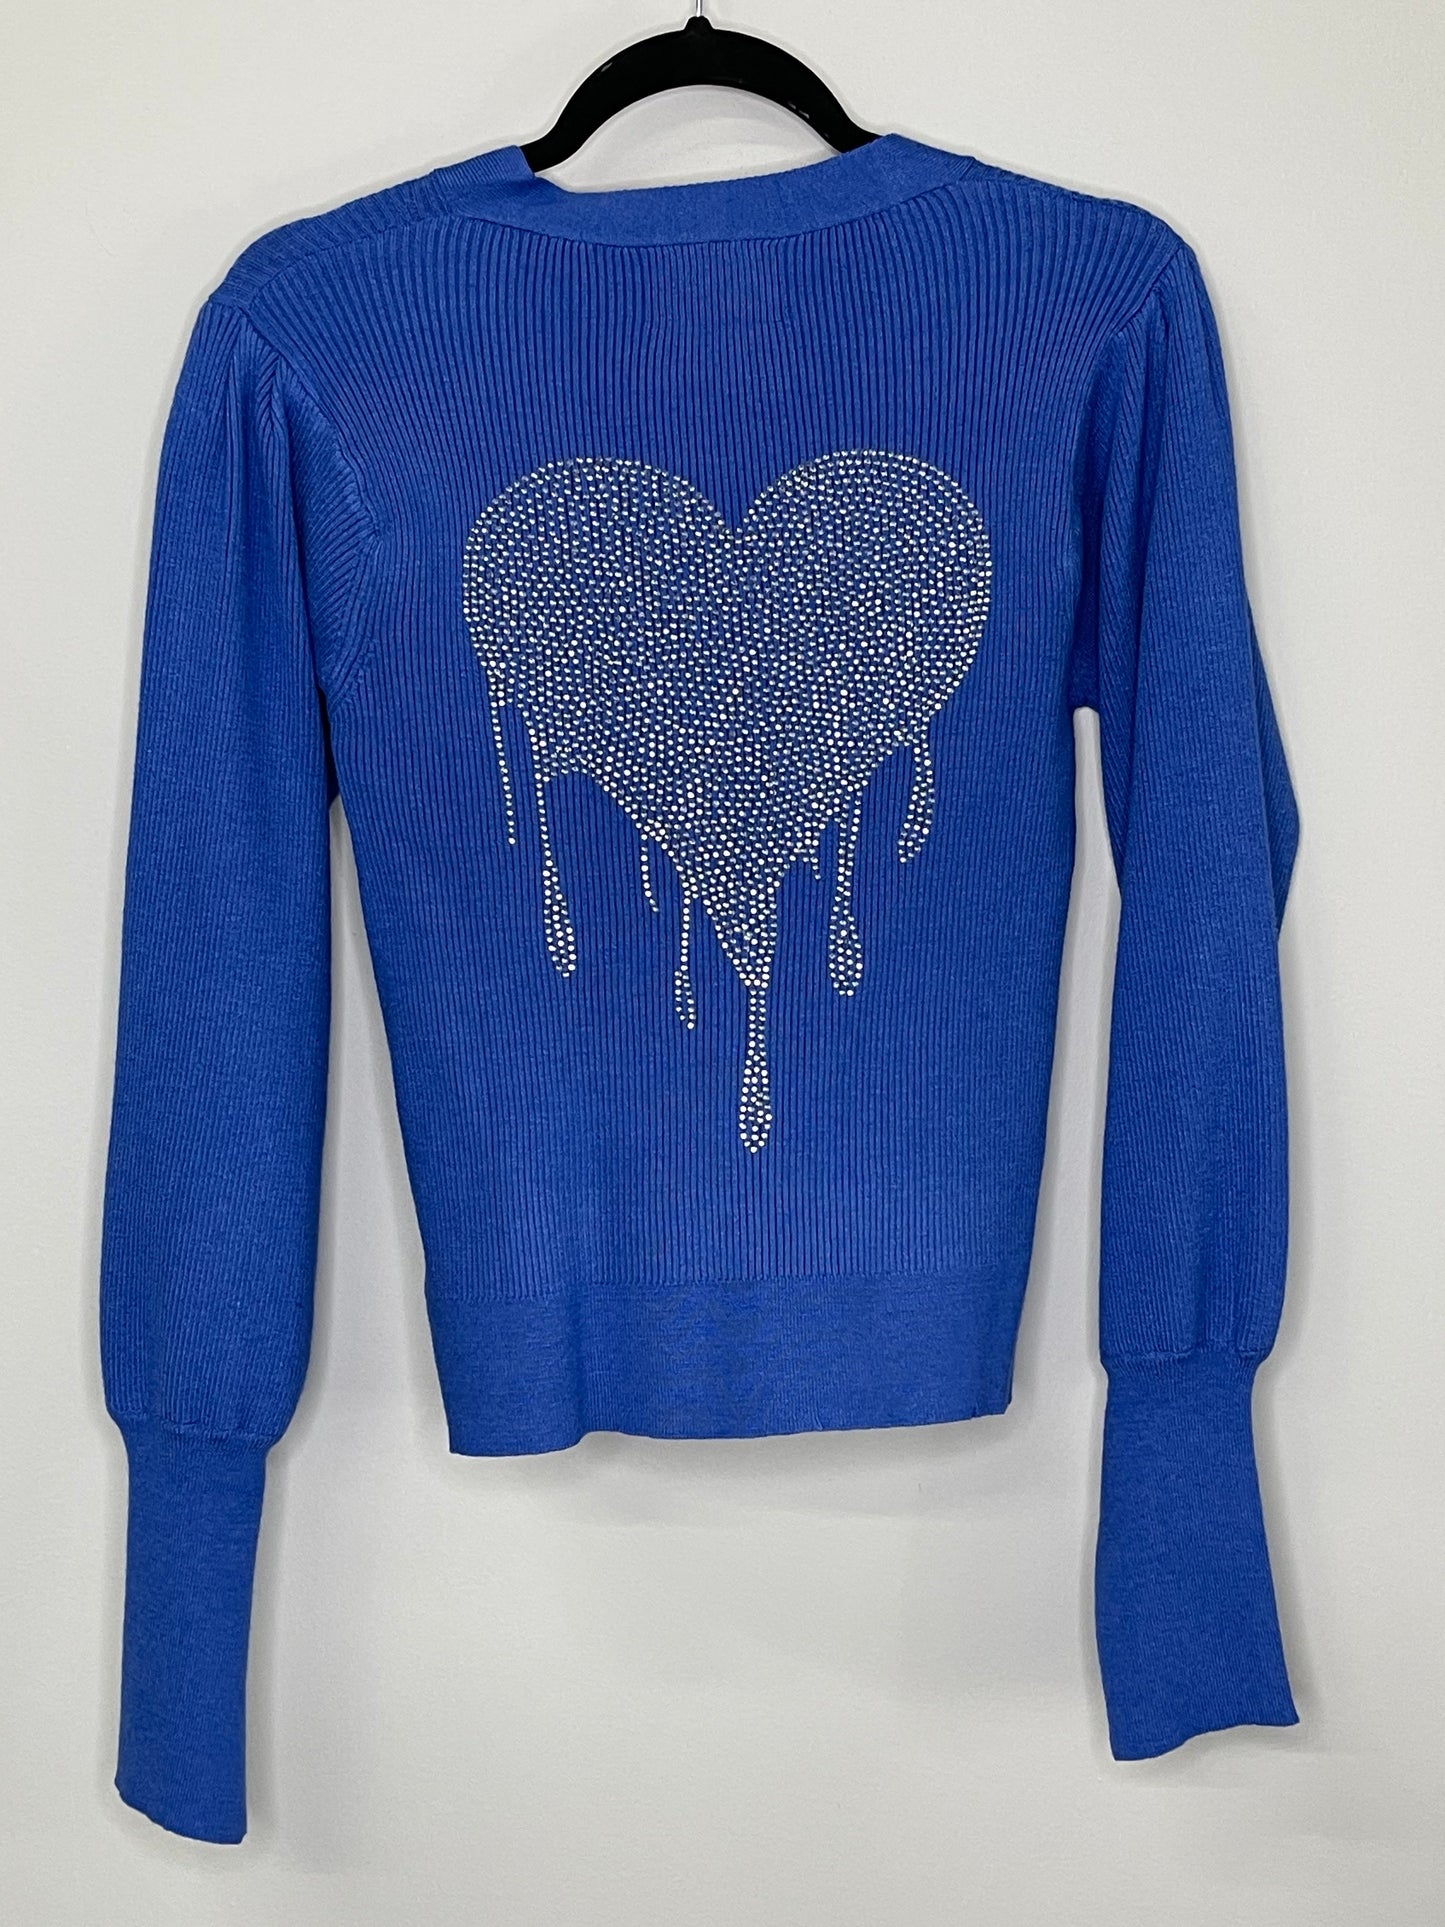 Sweater, Cardigan Puff Shoulder Blue, Dripping Heart